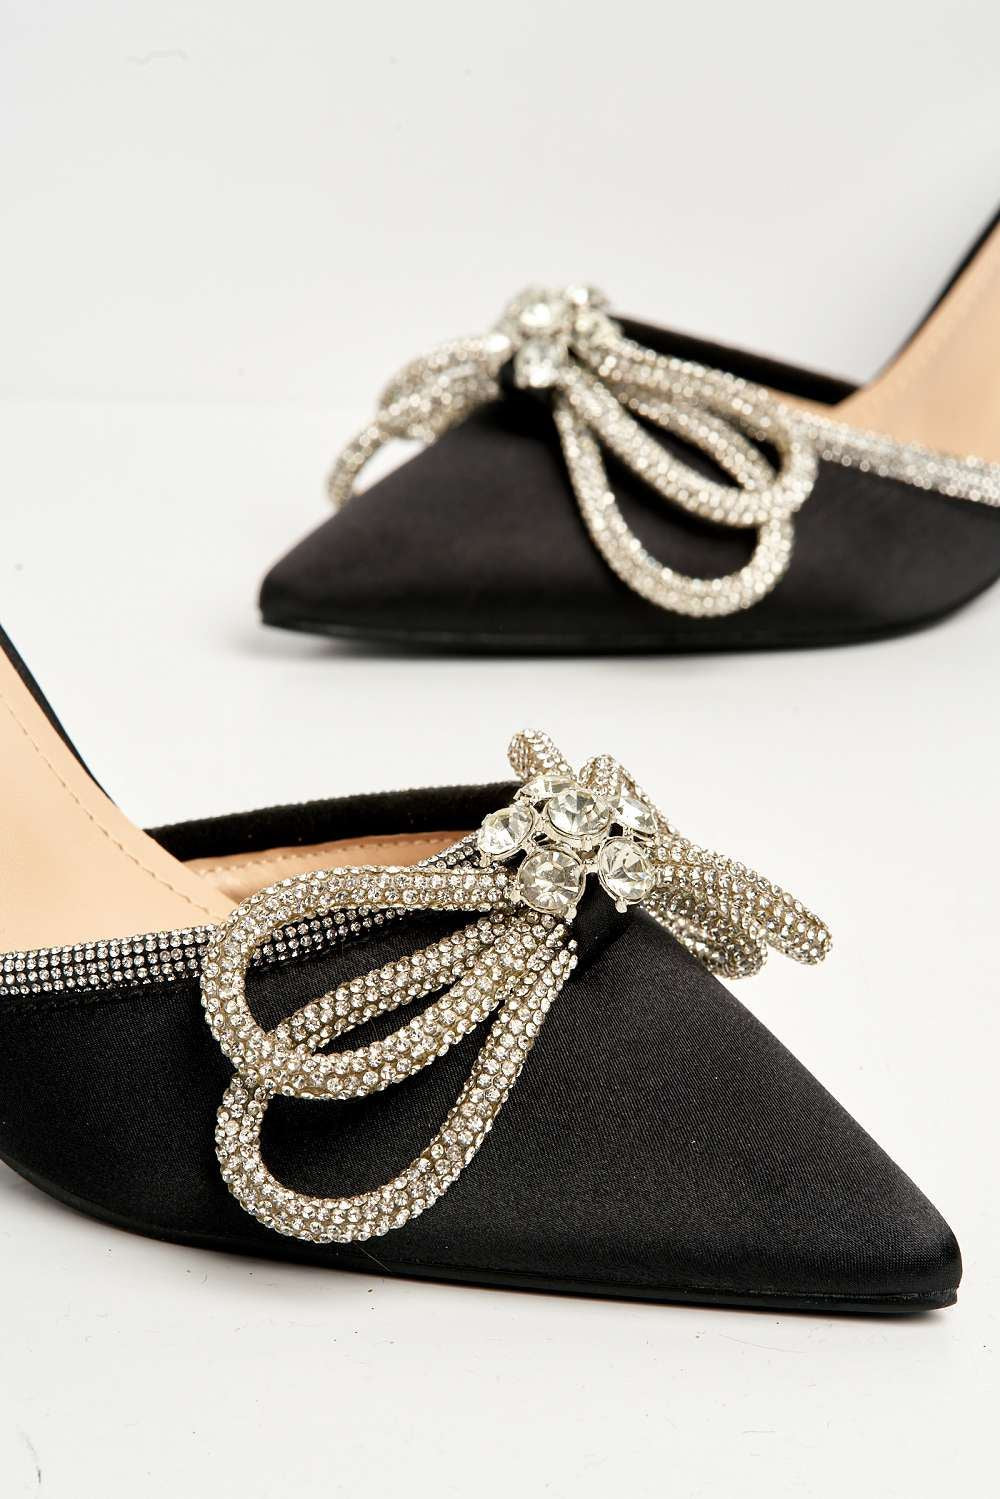 Miss Diva Natalie Pointed Toe Diamante Bow & Strap Court Shoe Heel in Black Satin